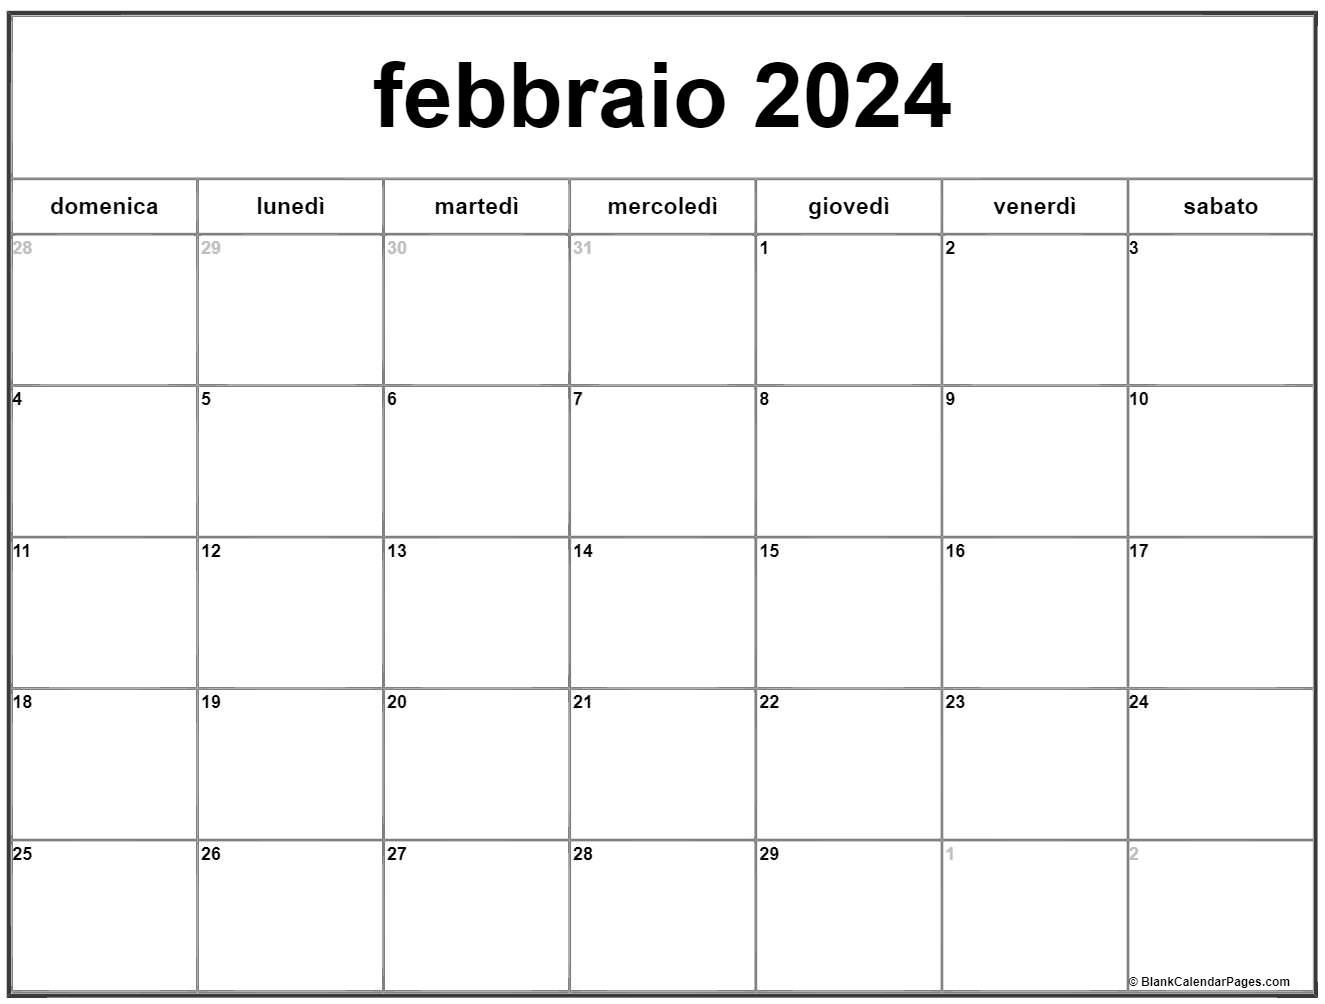 febbraio 2024 calendario gratis italiano Calendario febbraio